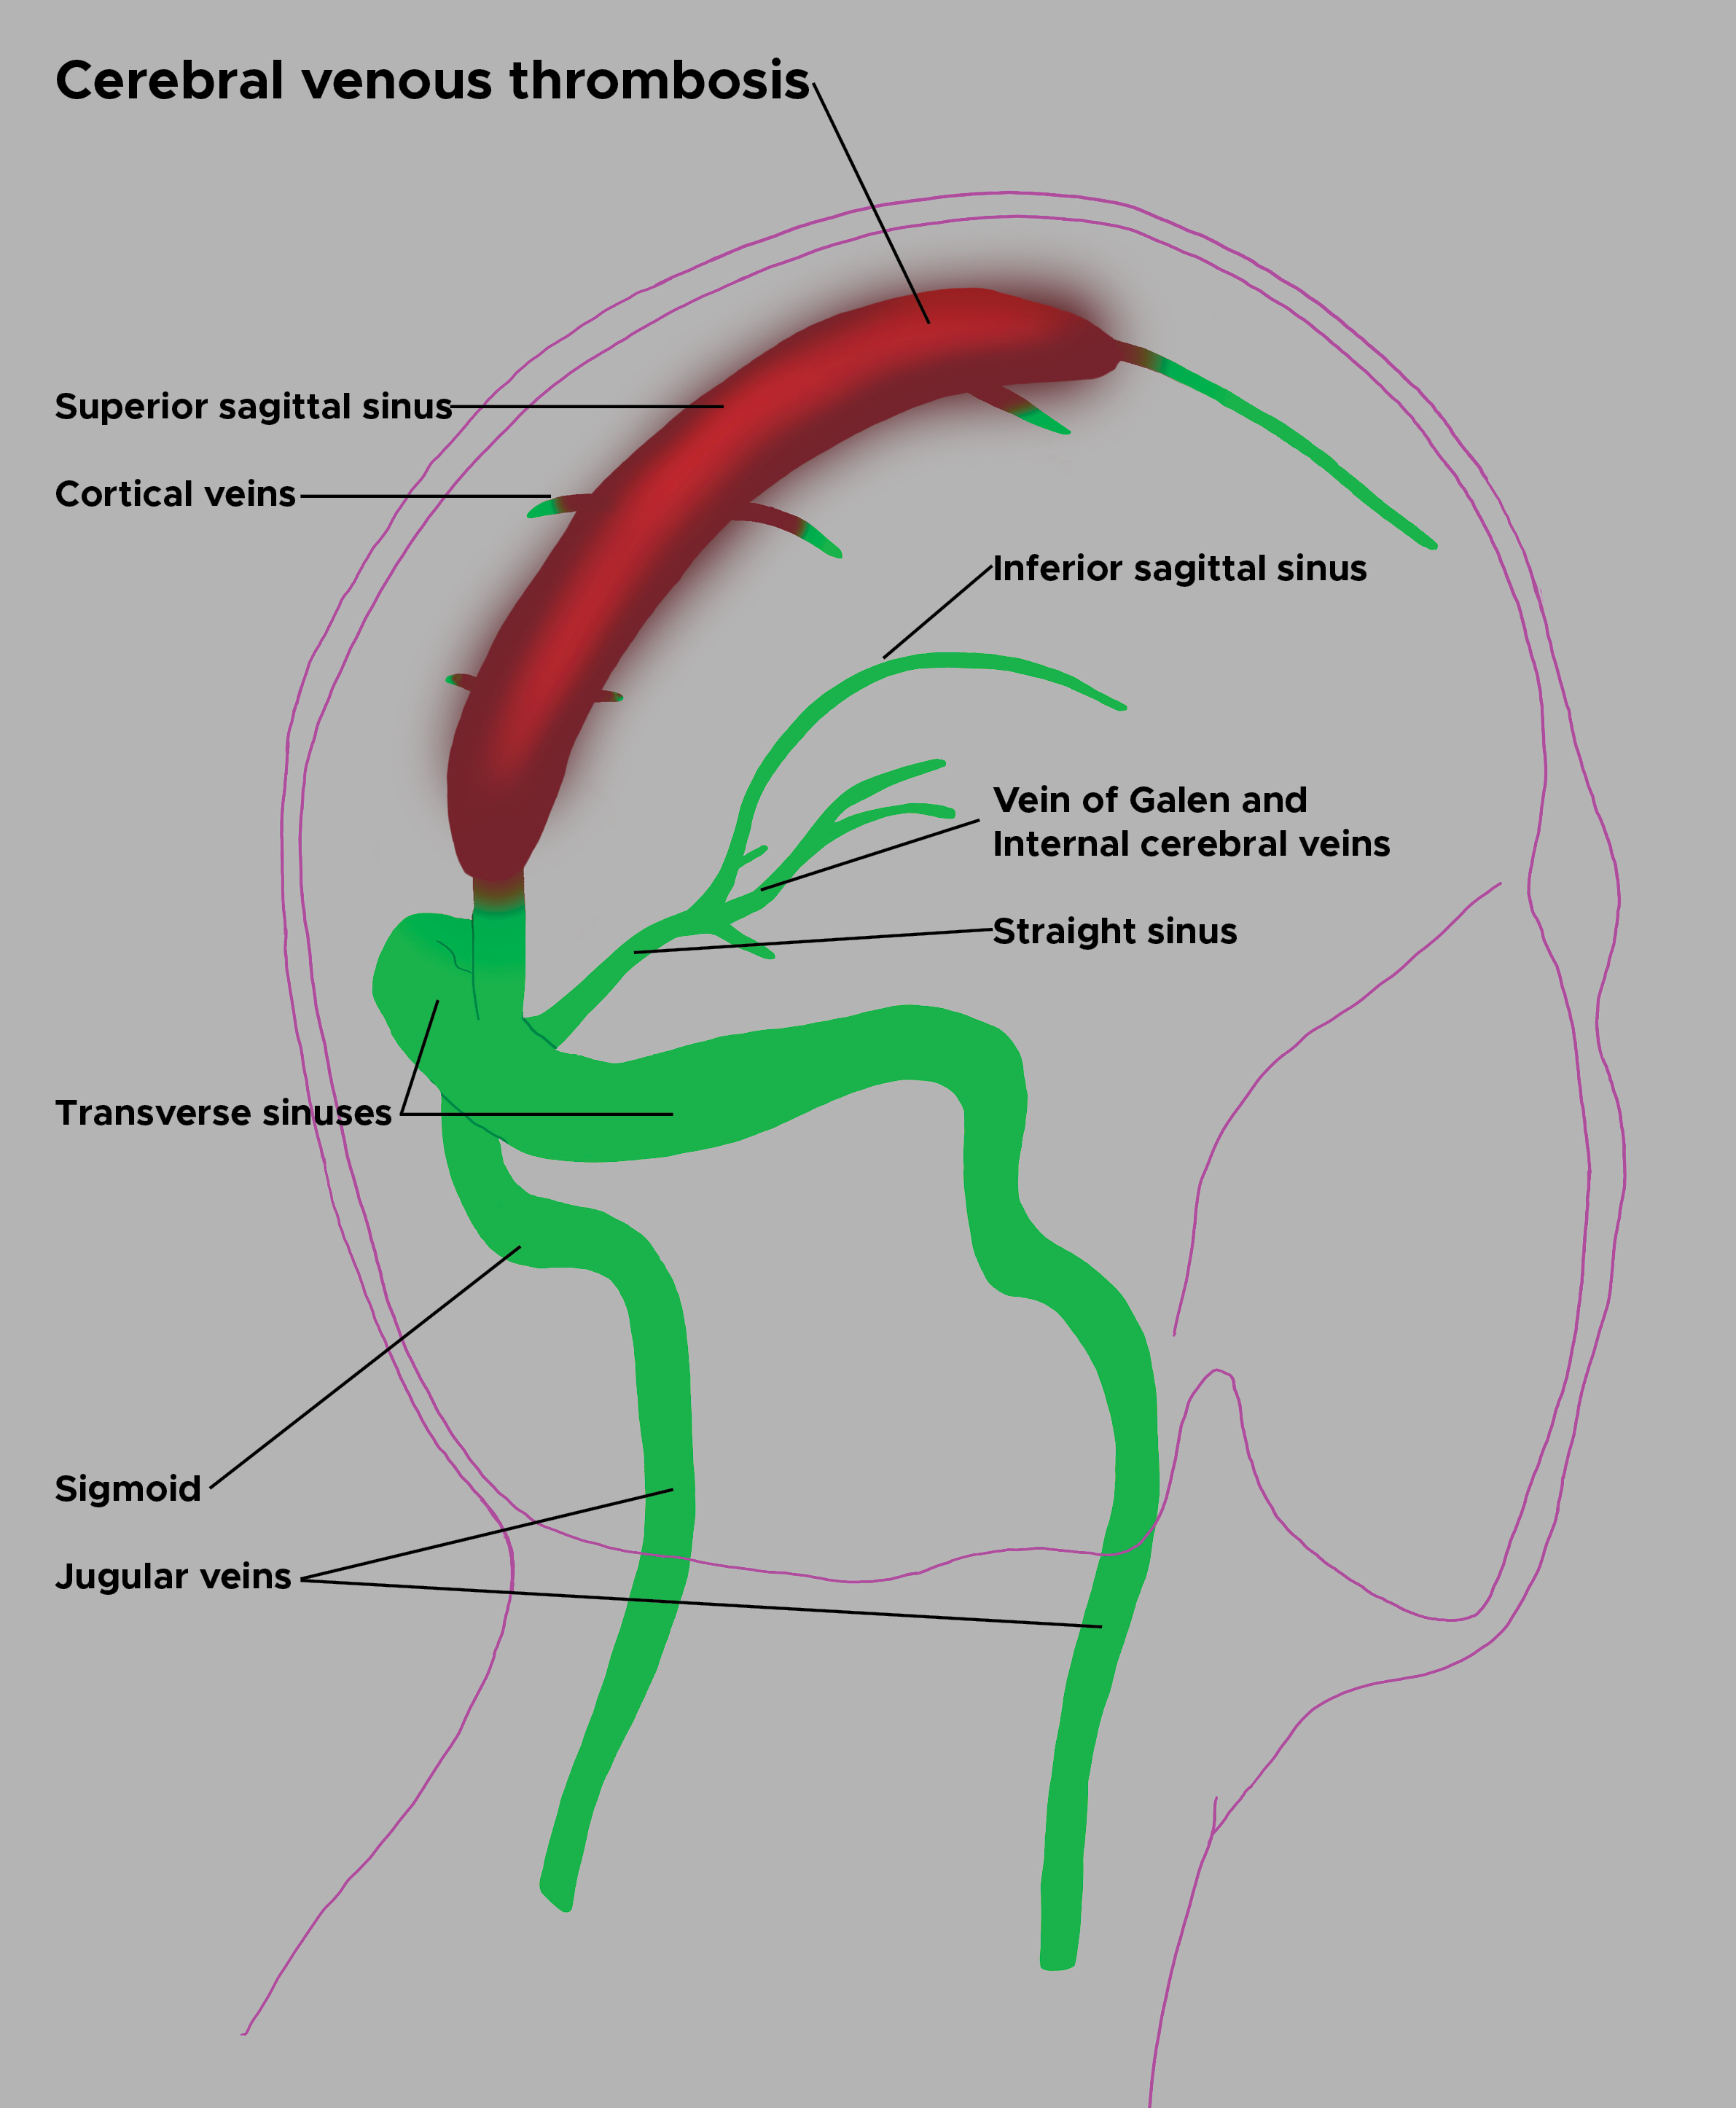 Illustration of cerebral venous thrombosis. Superior sagittal sinus, cortical veins, inferior sagittal sinus, Vein of Galen, internal cerebral veins, straight sinus, transverse sinus, sigmoid, jugular veins.